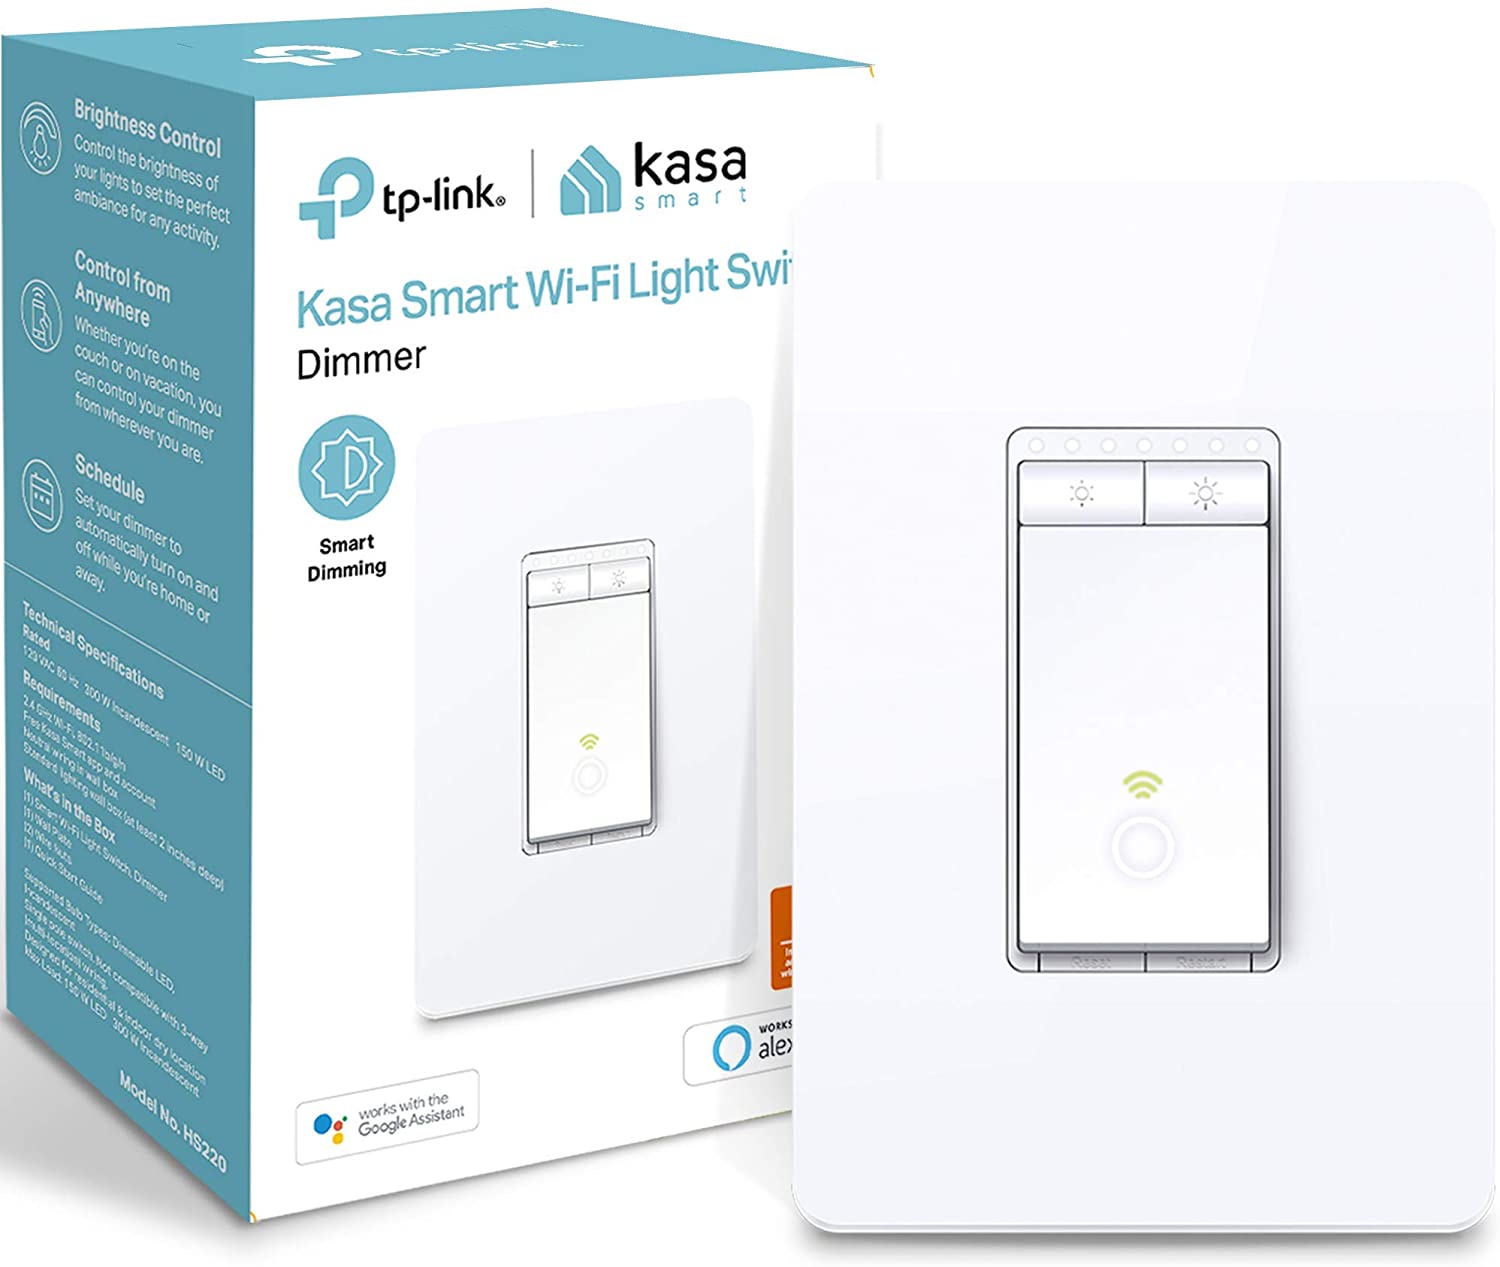 TP-Link Kasa WiFi Smart Dimmer Switch HS220 + 15% back for Prime card holders - $13.99 + FS w/ Prime